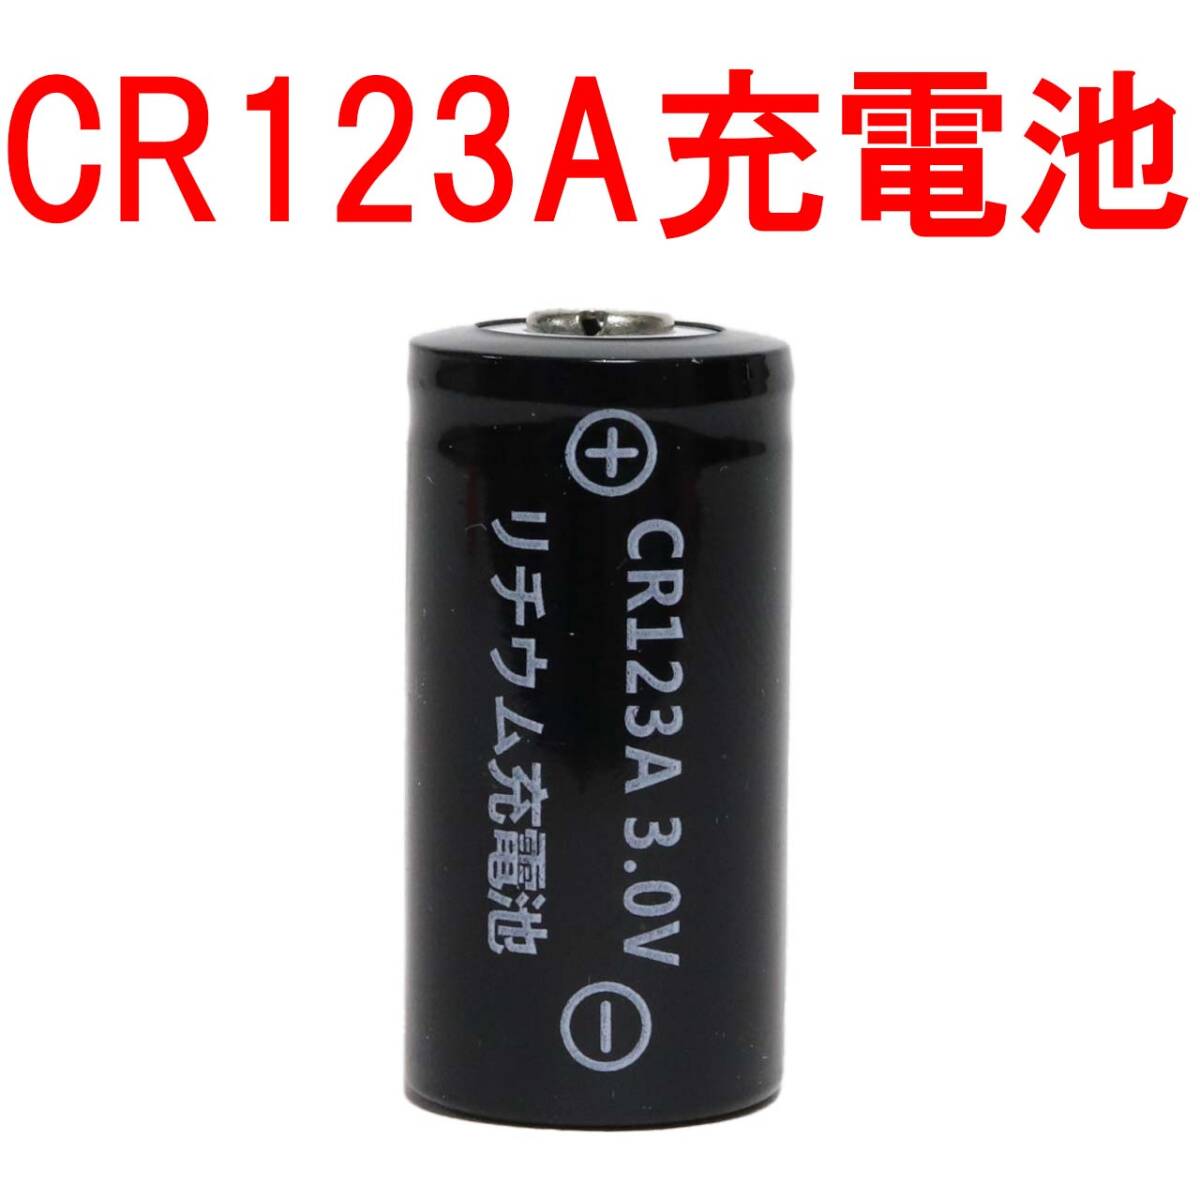 CR123A リチウムイオン充電池 スマートロック 鍵 スマートキー ドアロック switch bot スイッチボット カメラ バッテリー 充電式 CR123A 02の画像1